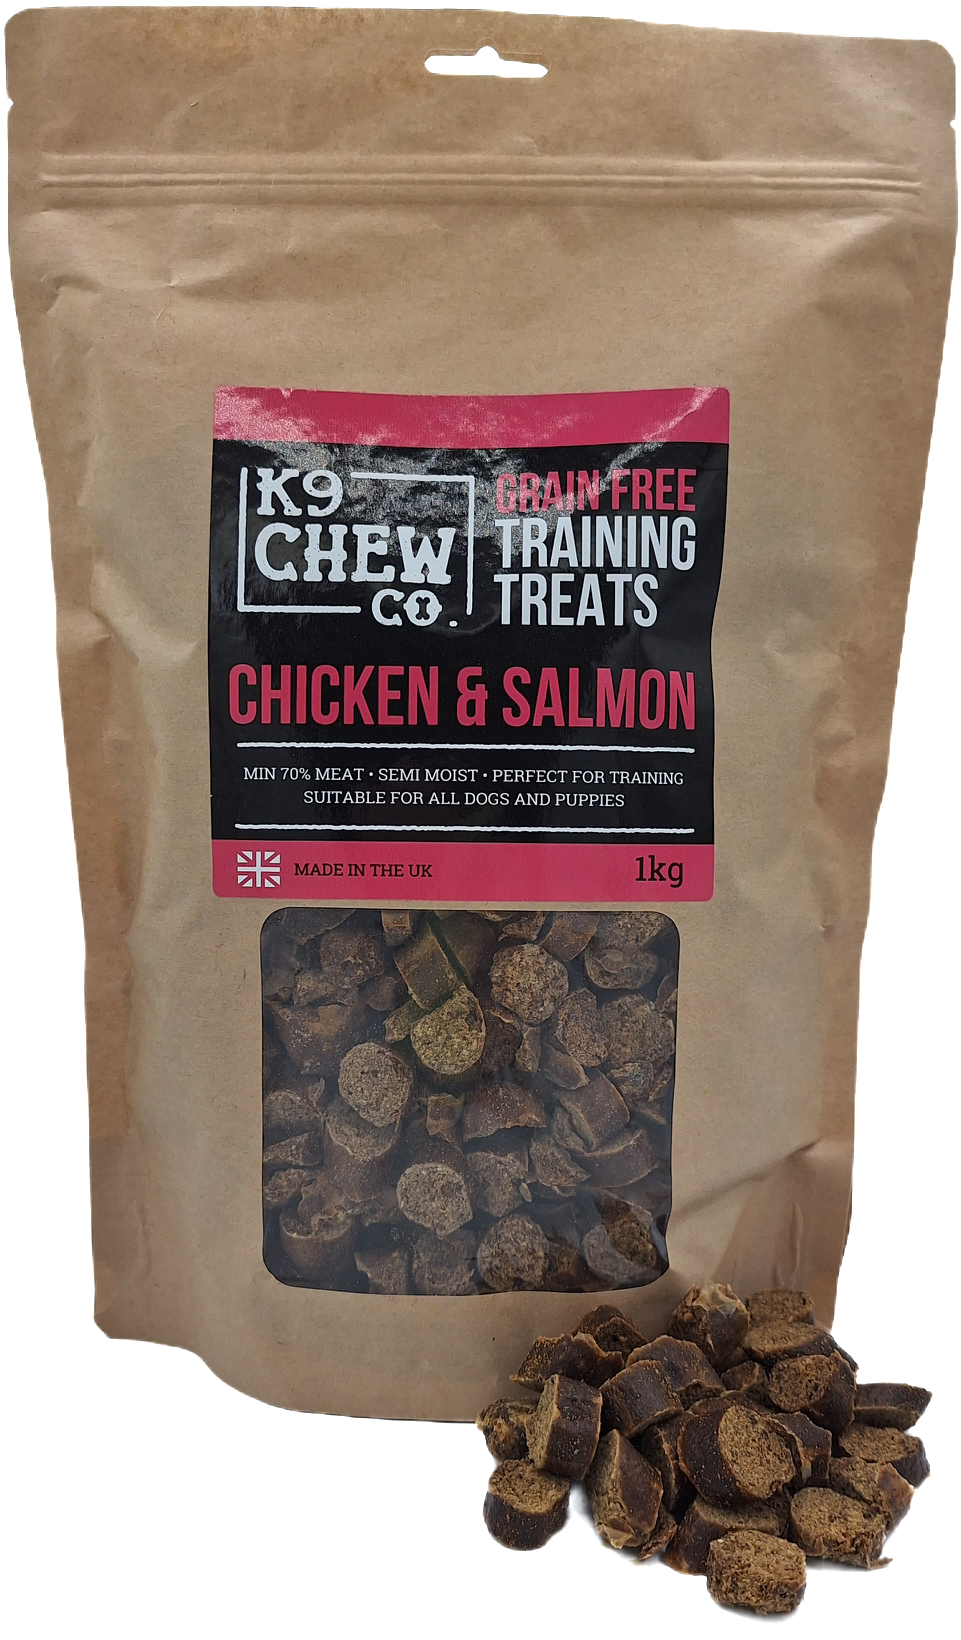 K9 Chew Co. Chicken & Salmon Training Treats 1kg